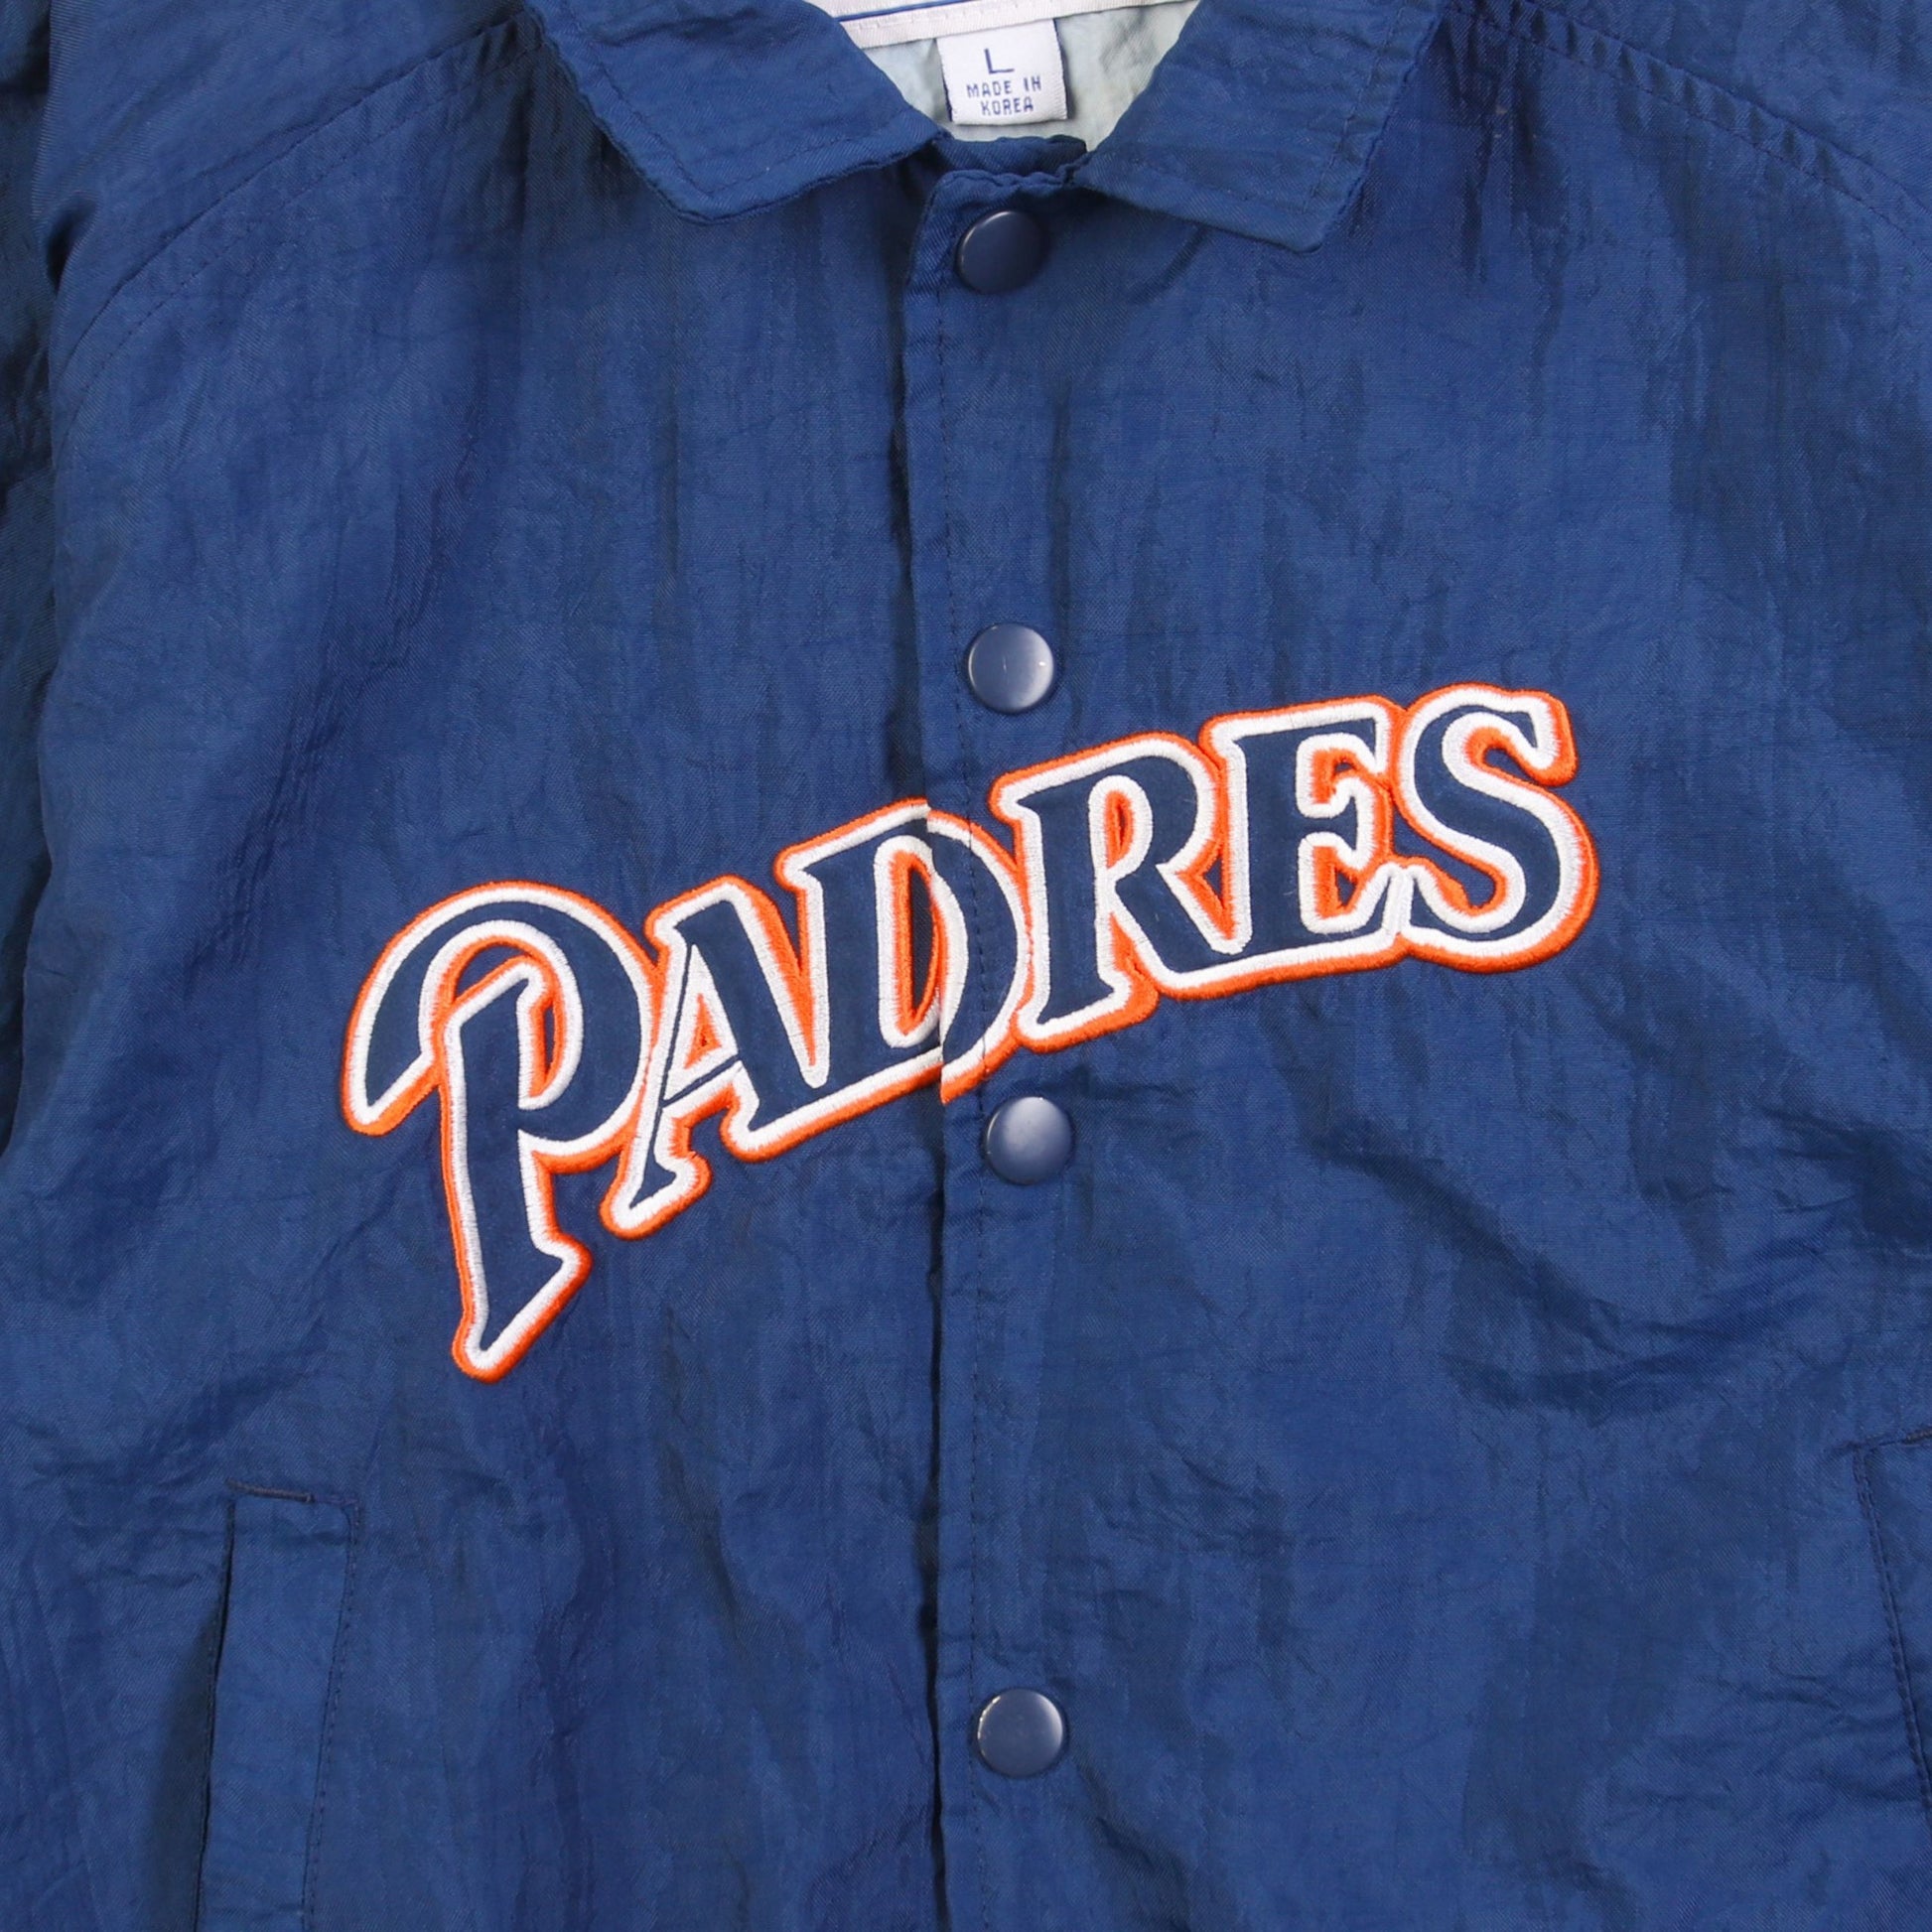 Vintage Padres Jacket - American Madness